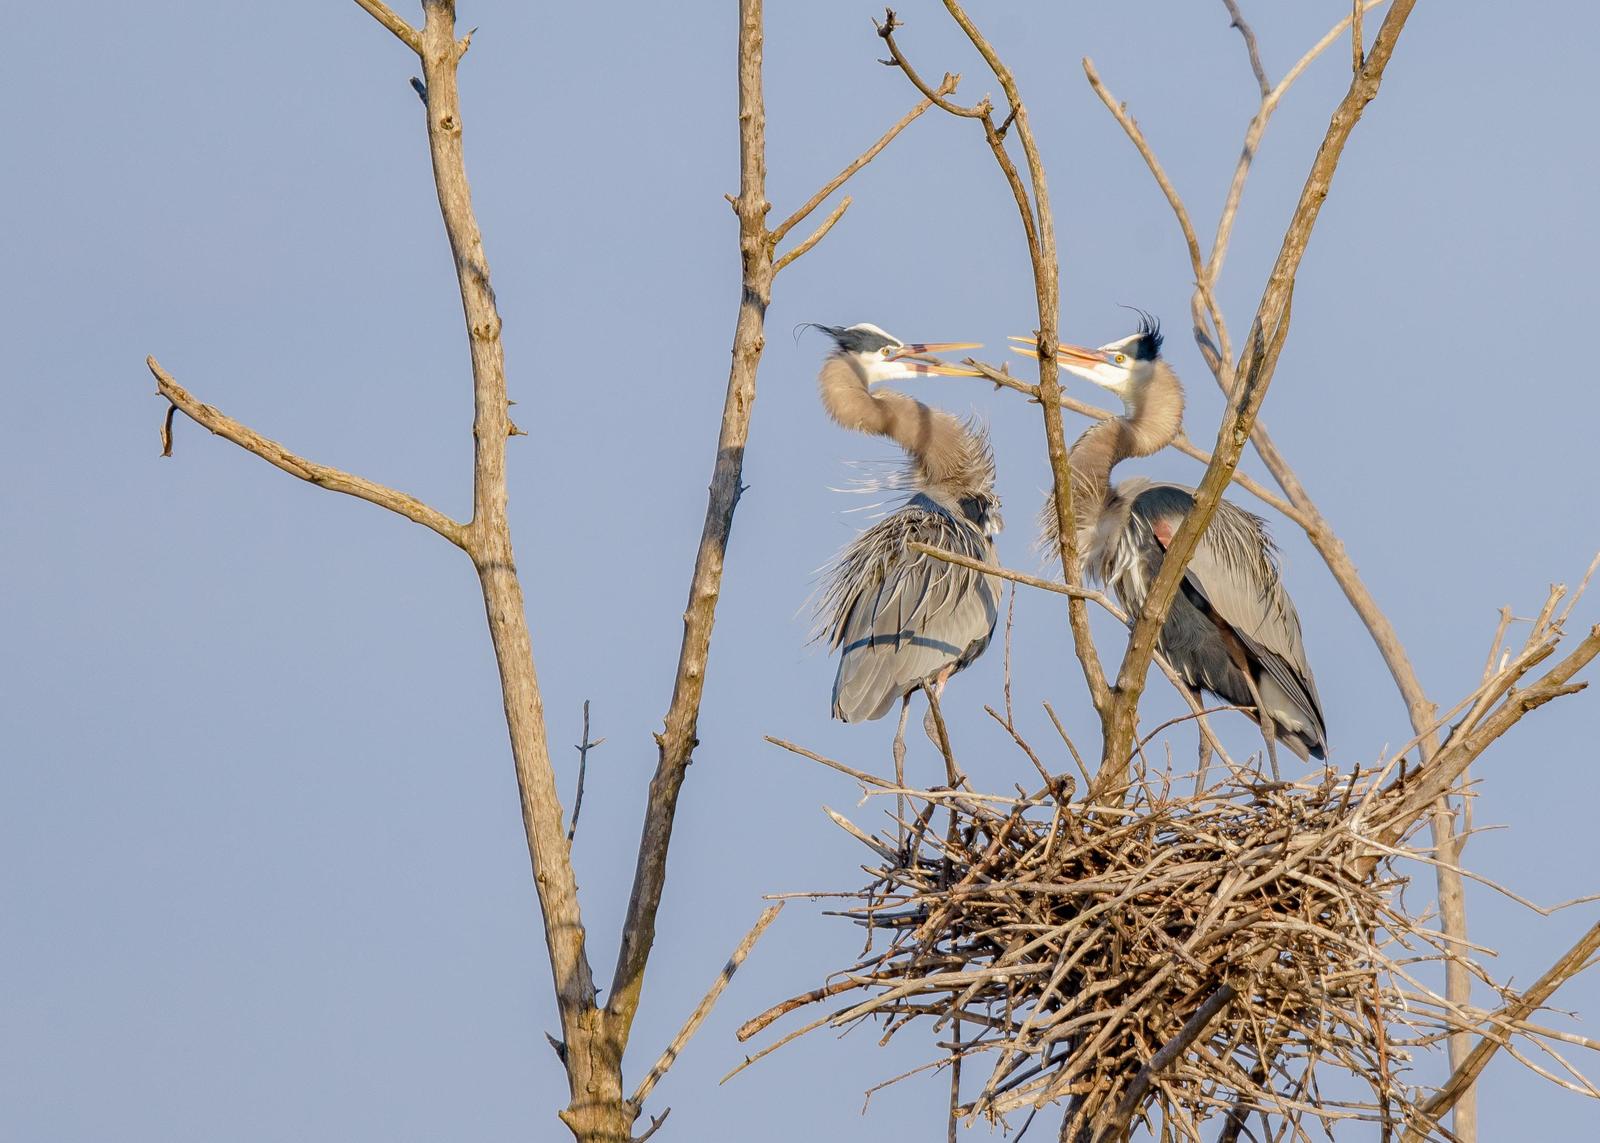 Great Blue Heron Photo by Keshava Mysore